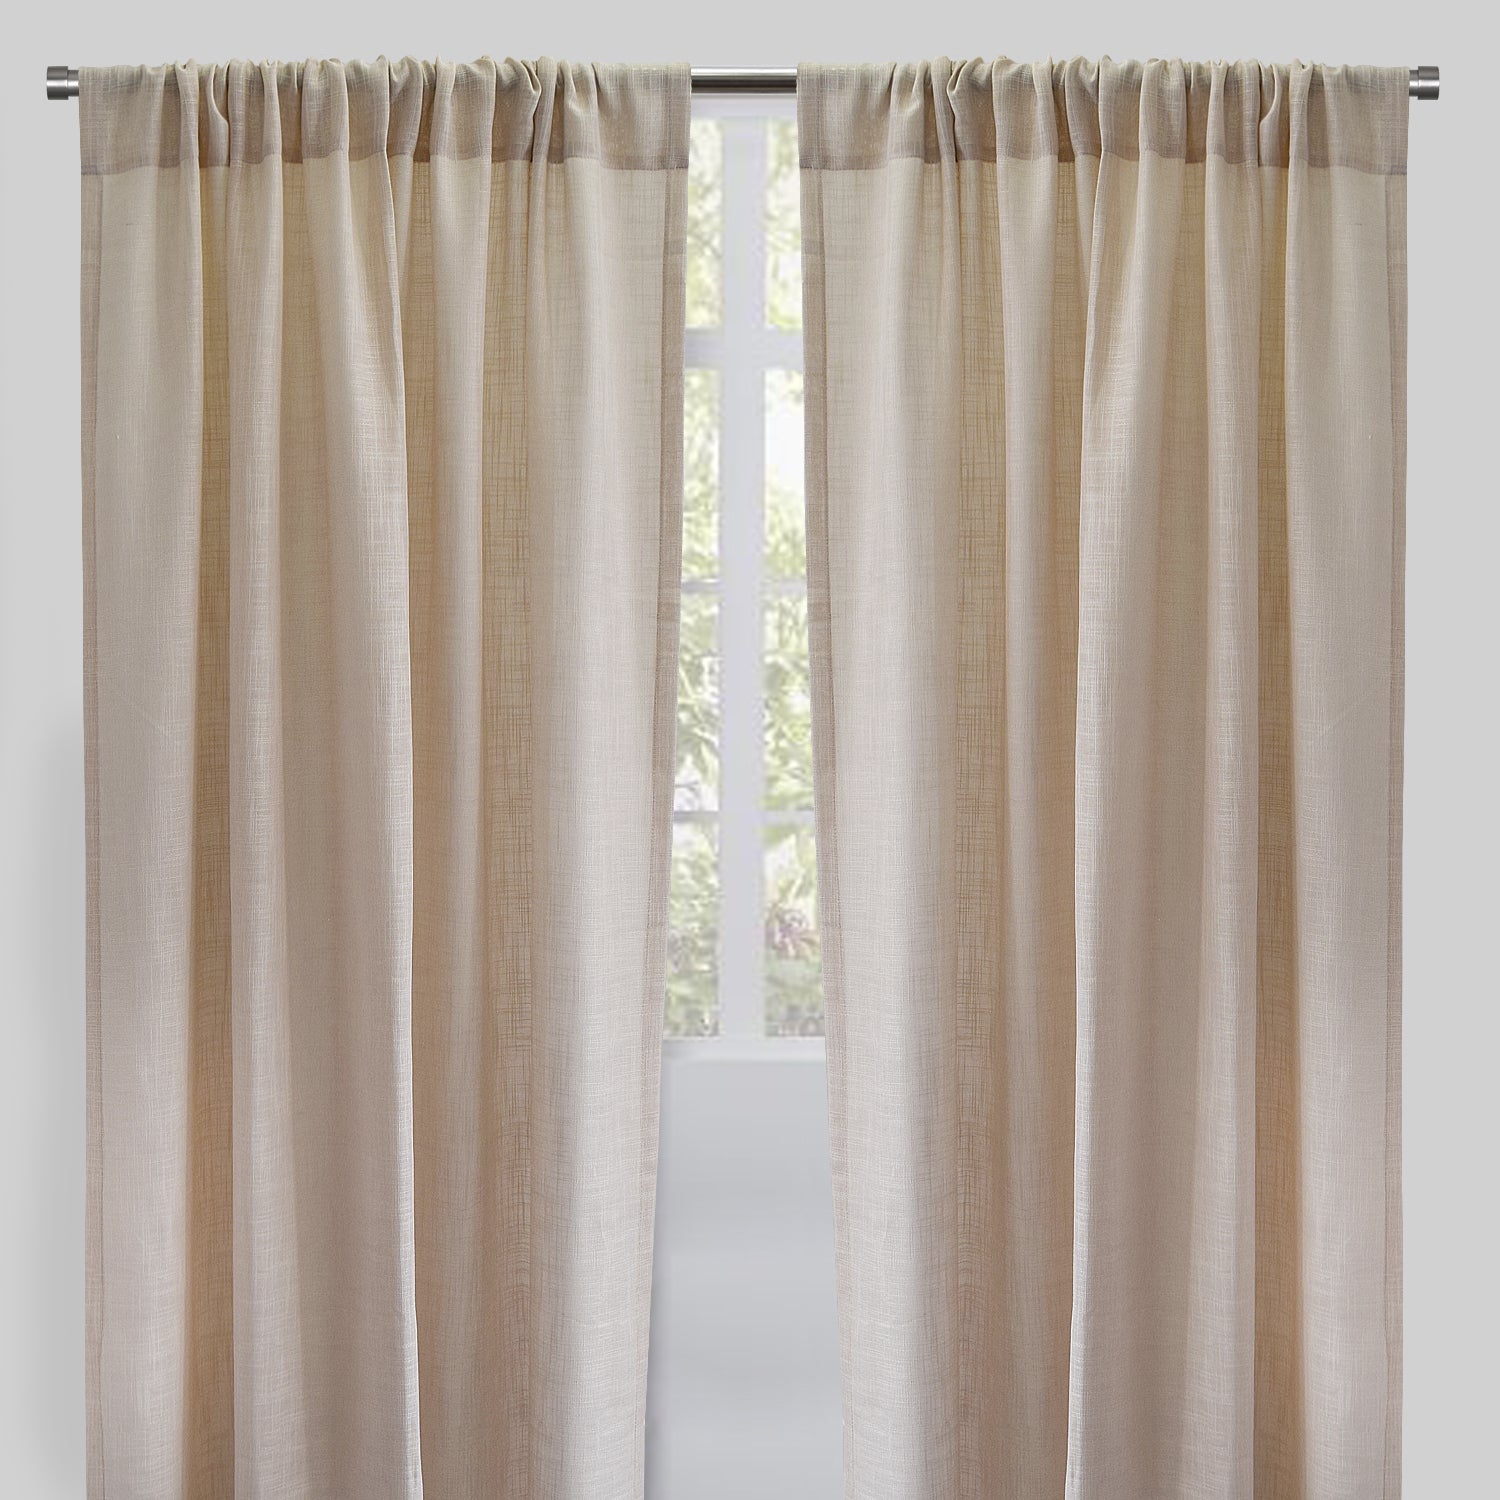 Ontario Curtain Panels | Solid Linen Look